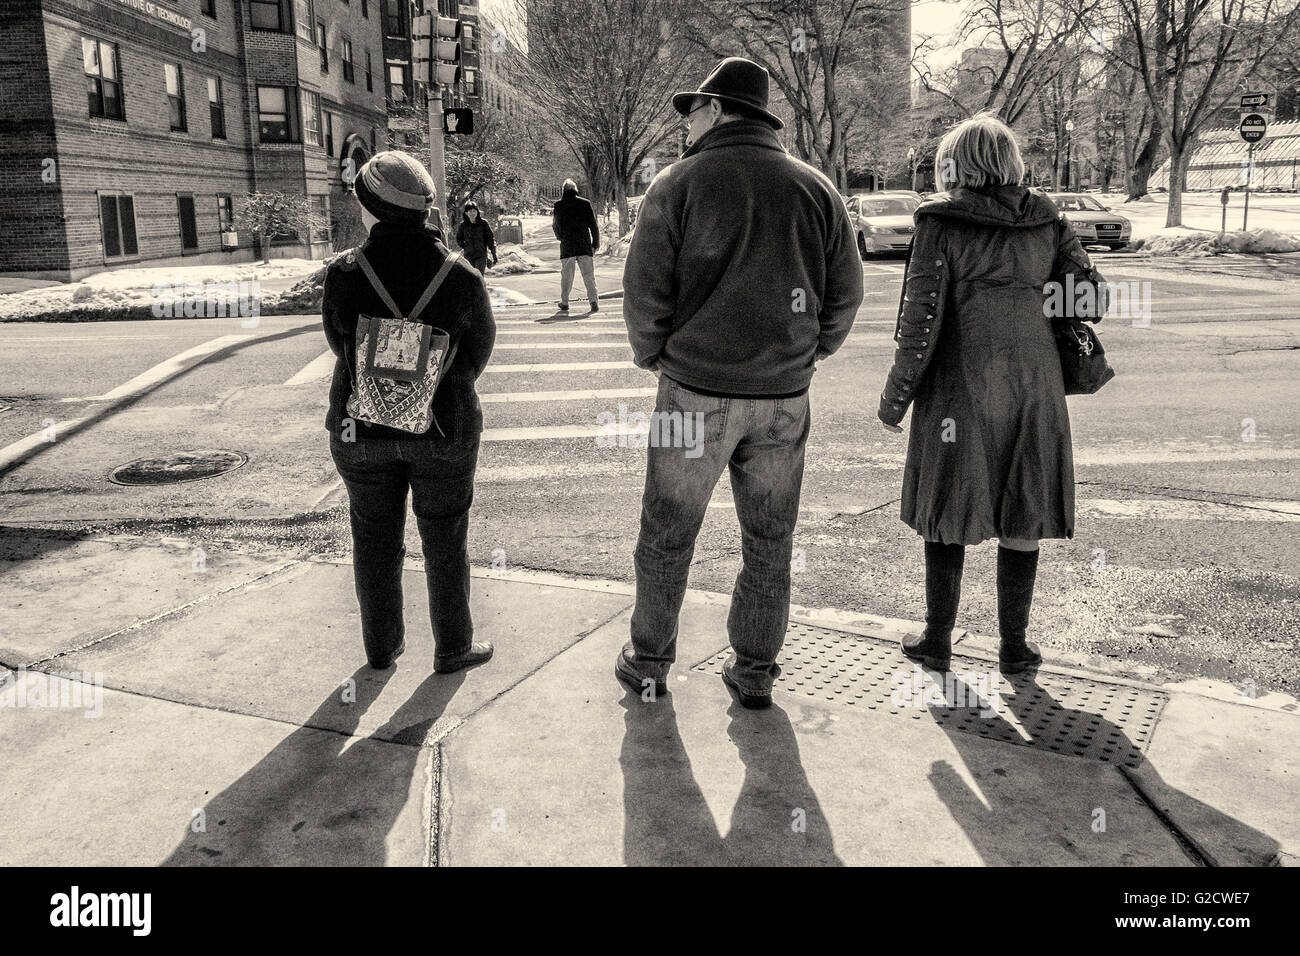 Three people waiting to cross the street in Boston, MA Stock Photo